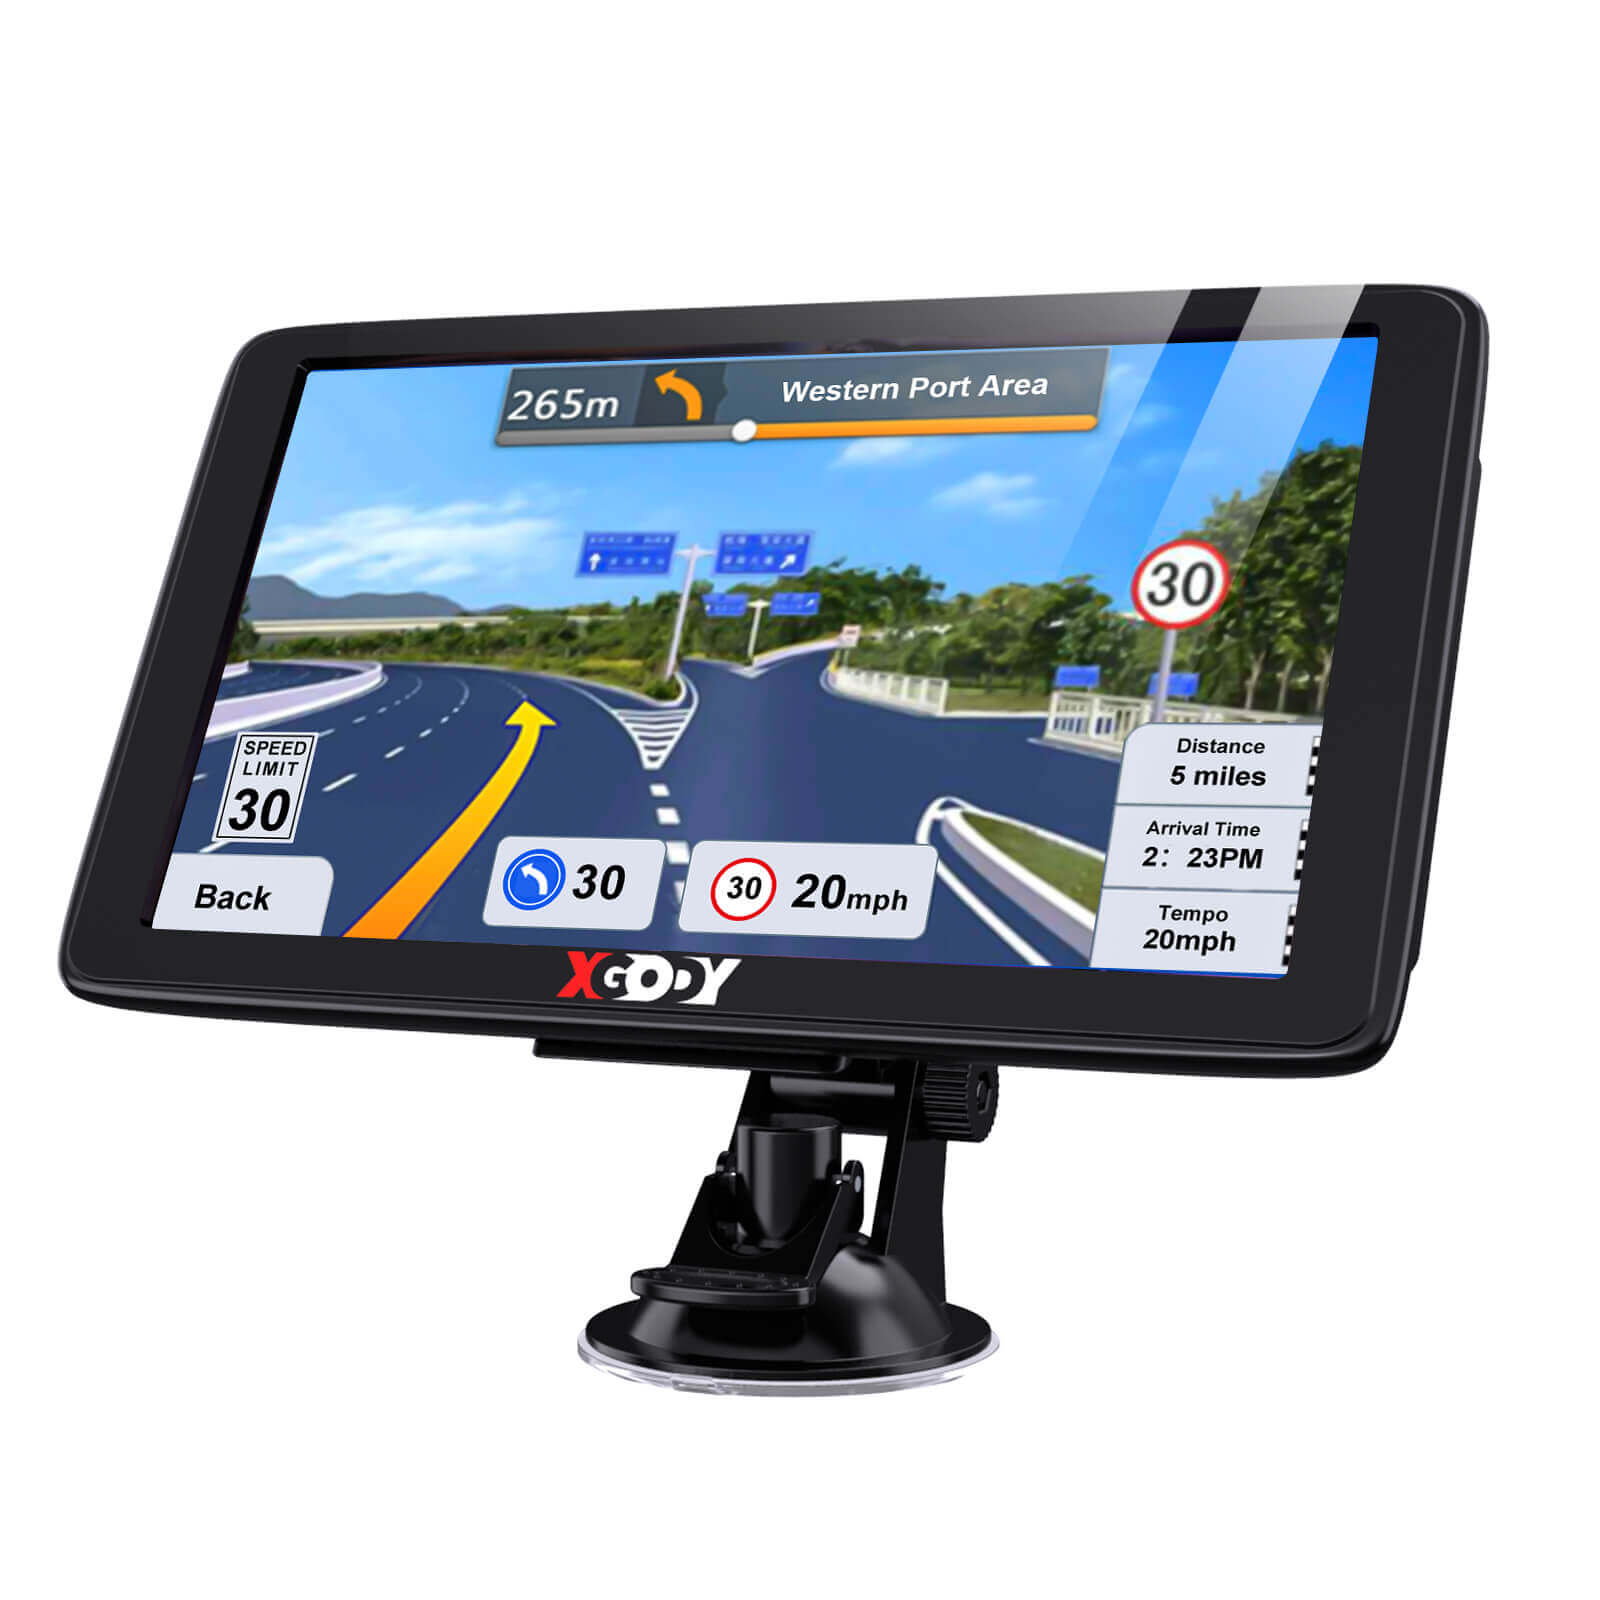 XGODY J727 Truck 7 Zoll Navi GPS mit Bluetooth AV-in Navigationssystem für Auto